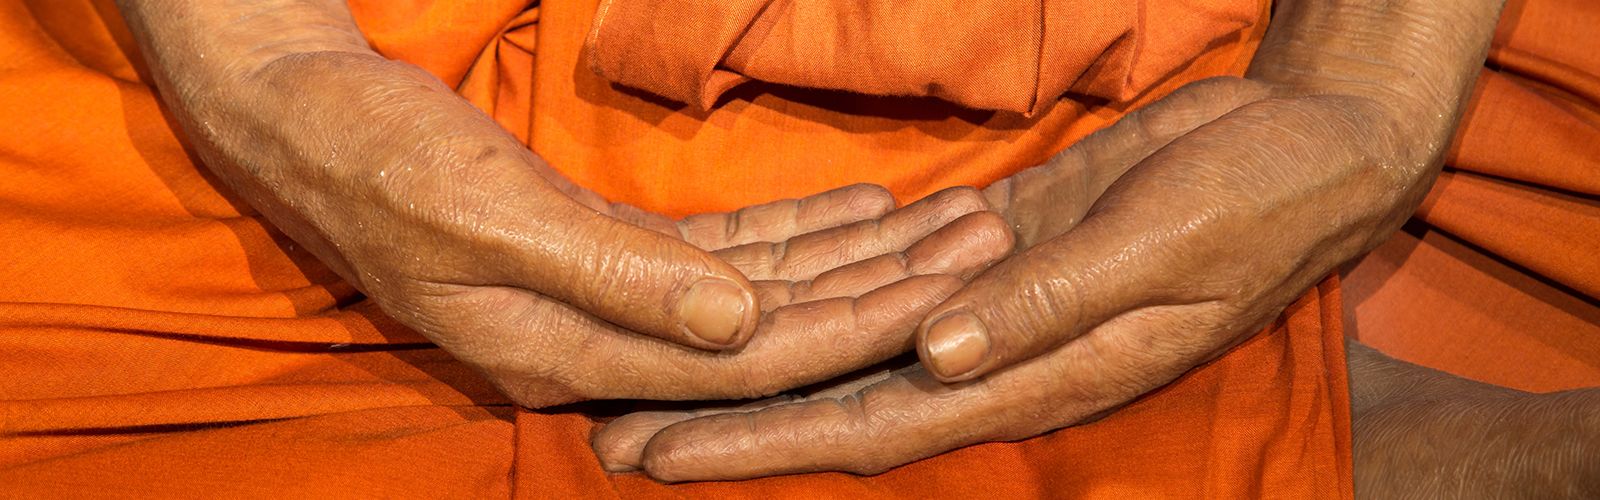 211029191201 monk meditating hands